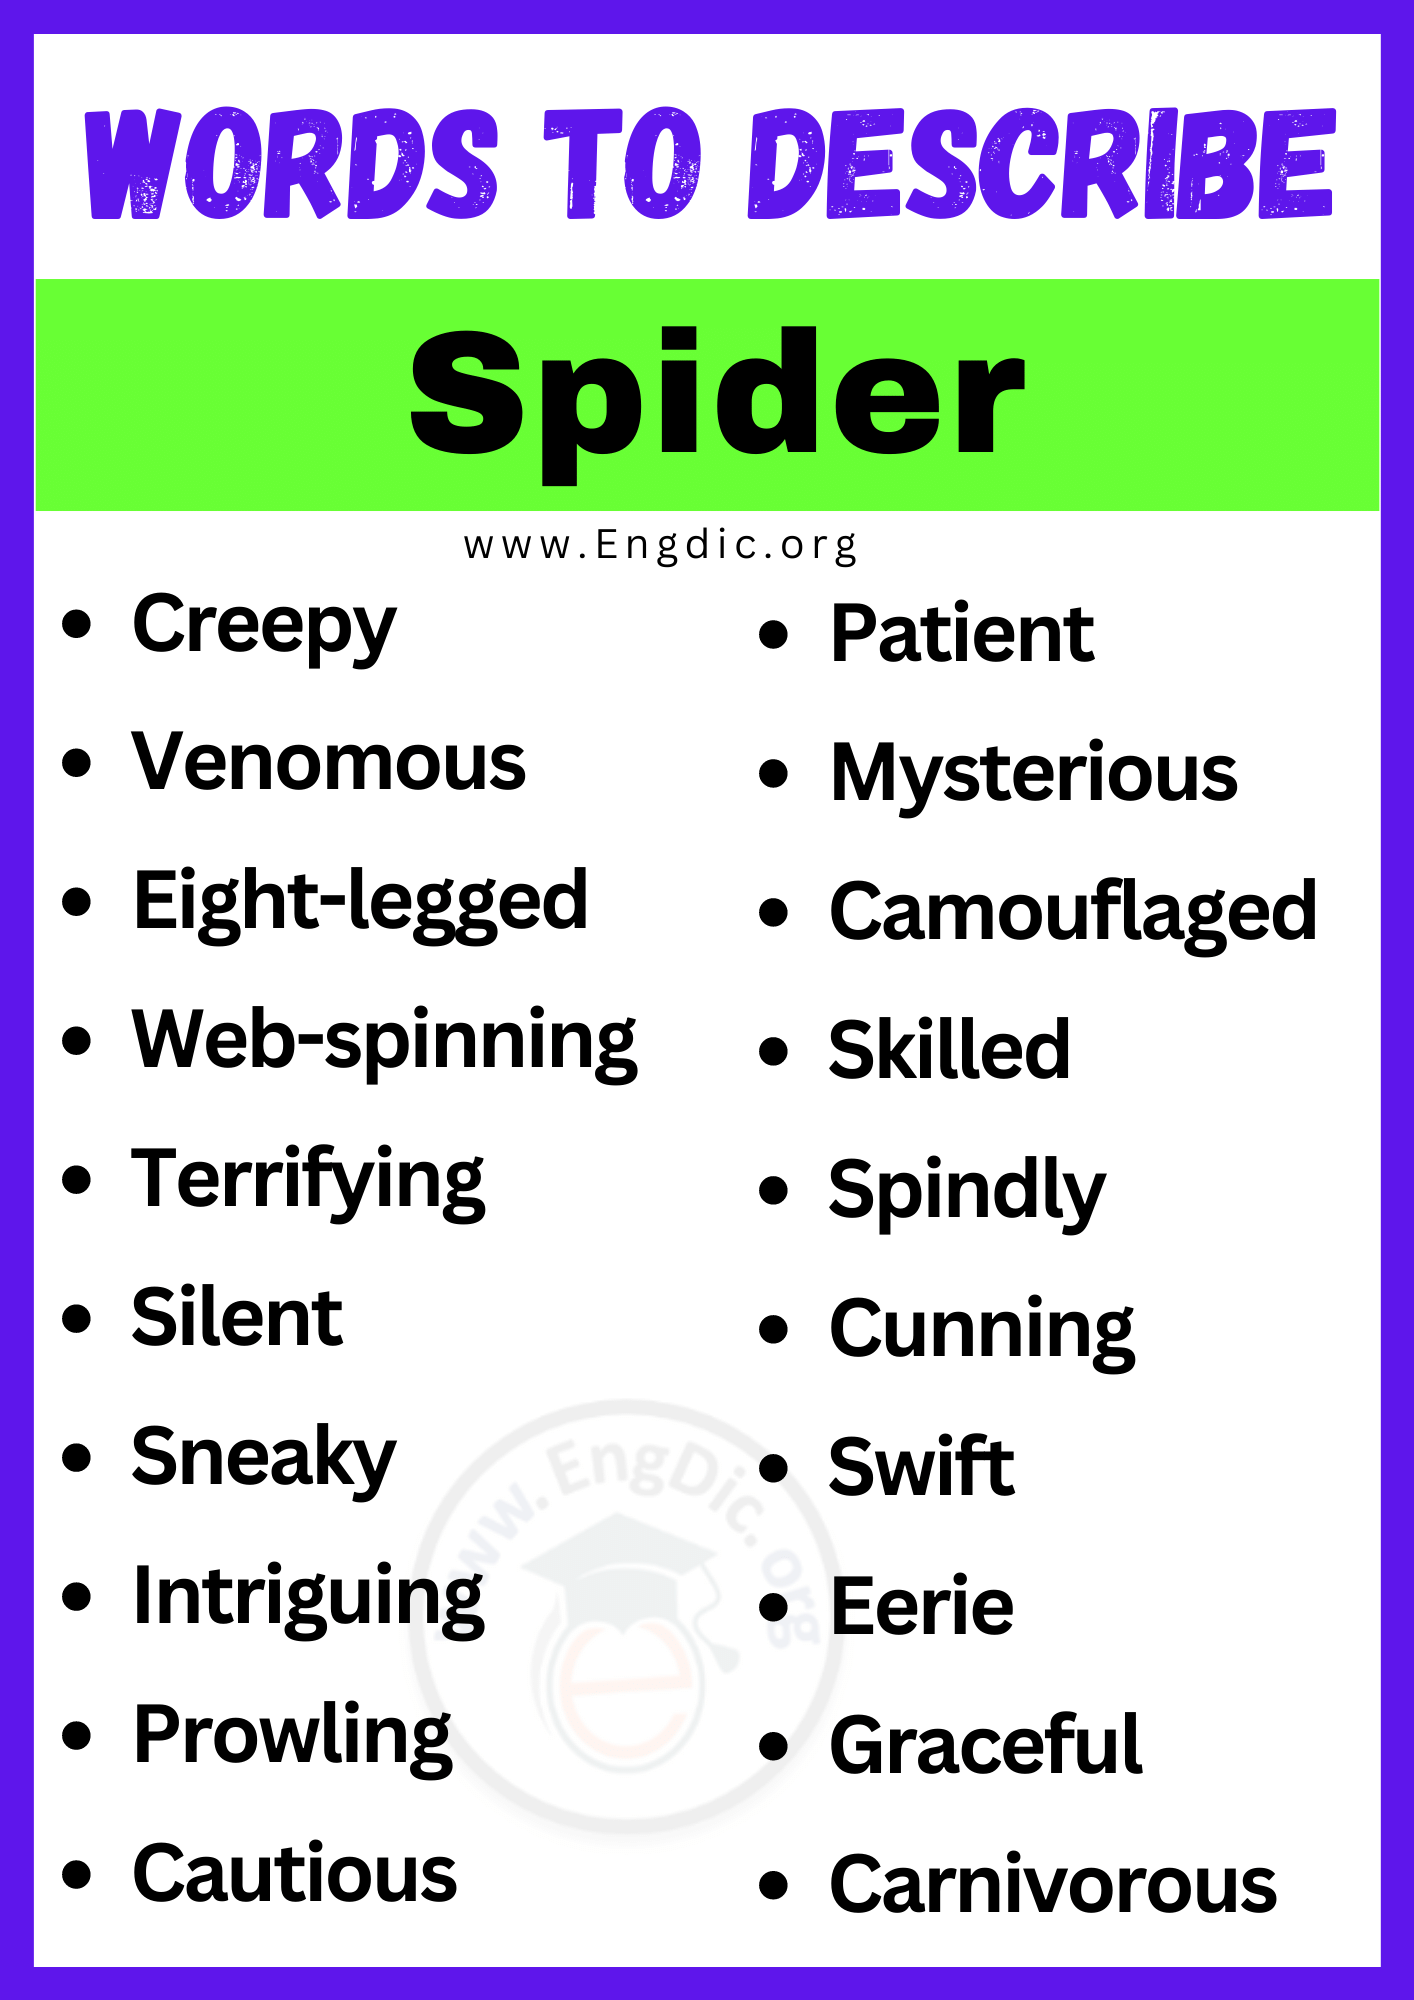 Words to Describe Spider